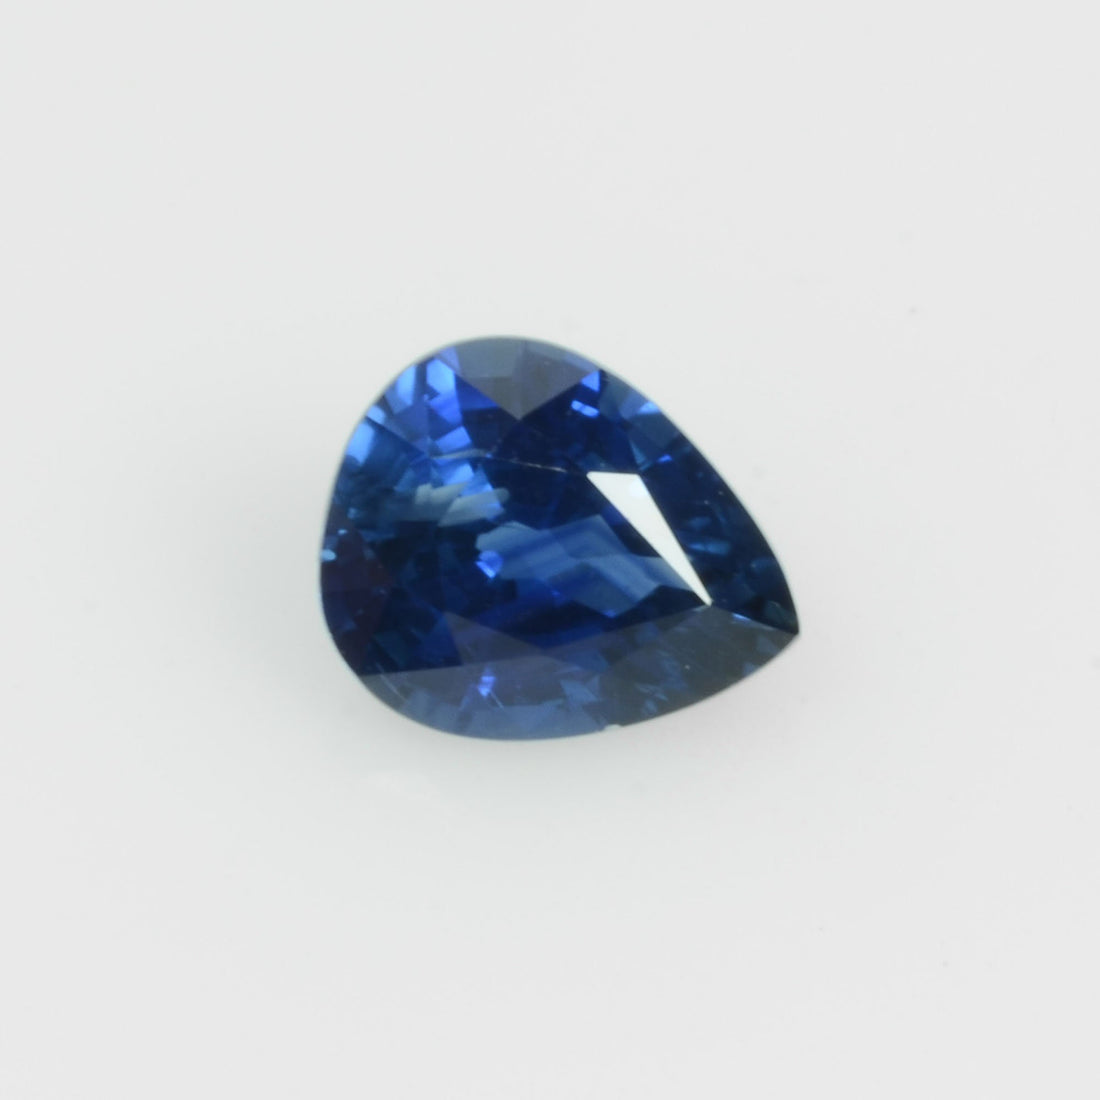 0.59 cts Natural Blue Sapphire Loose Gemstone Pear Cut